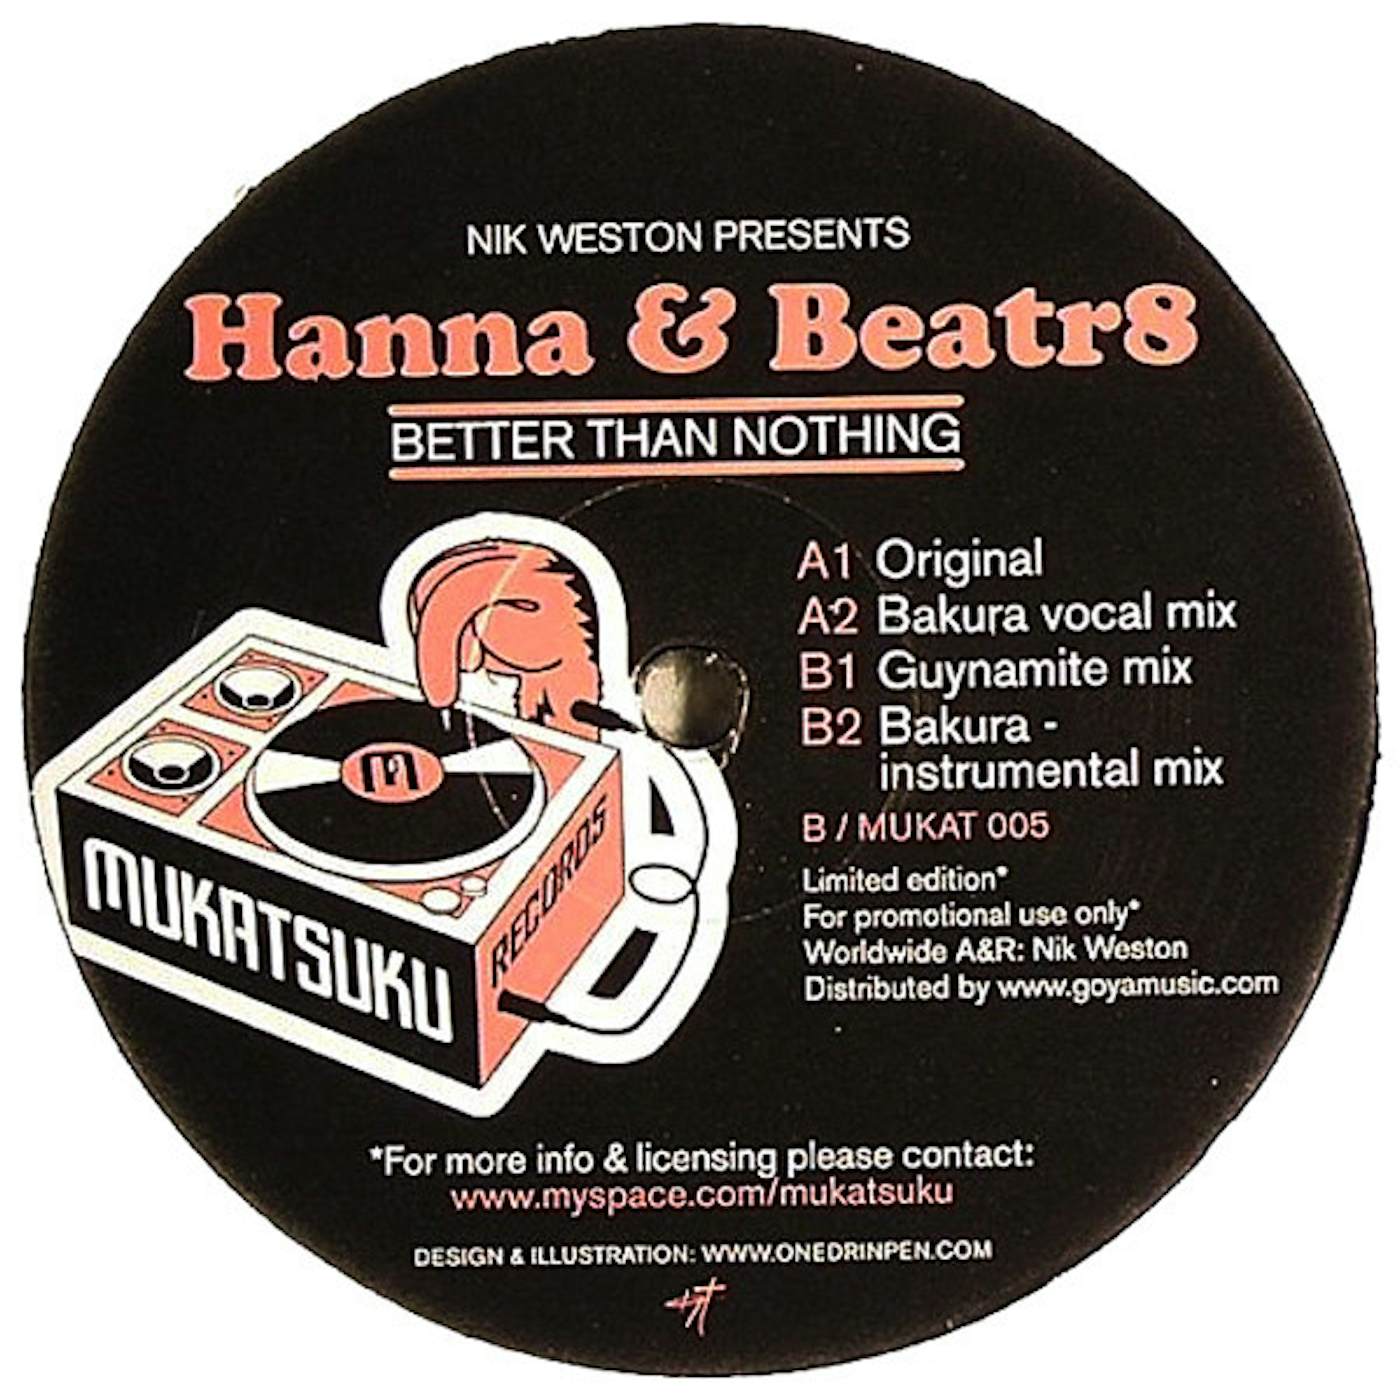 Hanna & Beatr8 BETTER THAN NOTHING Vinyl Record - UK Release